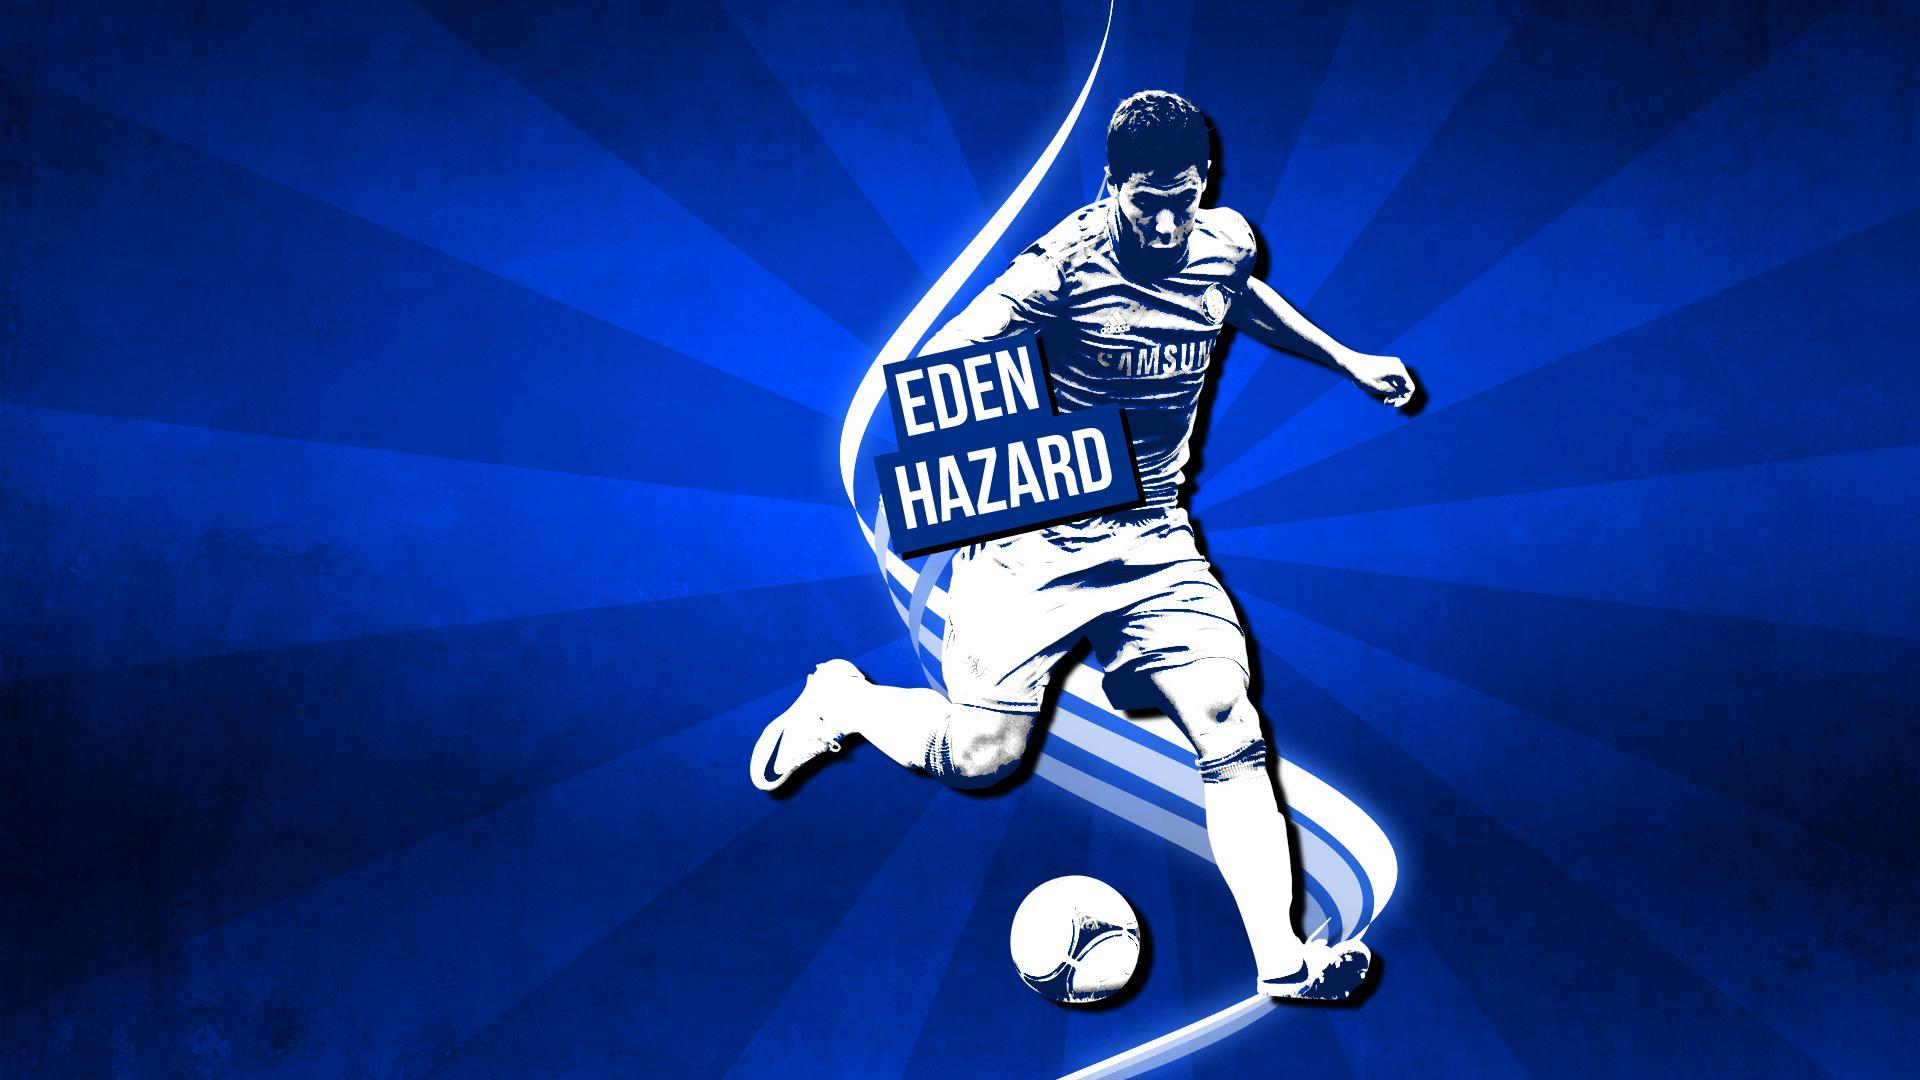 Wallpaper Eden Hazard Chelsea Fc Blues Sports